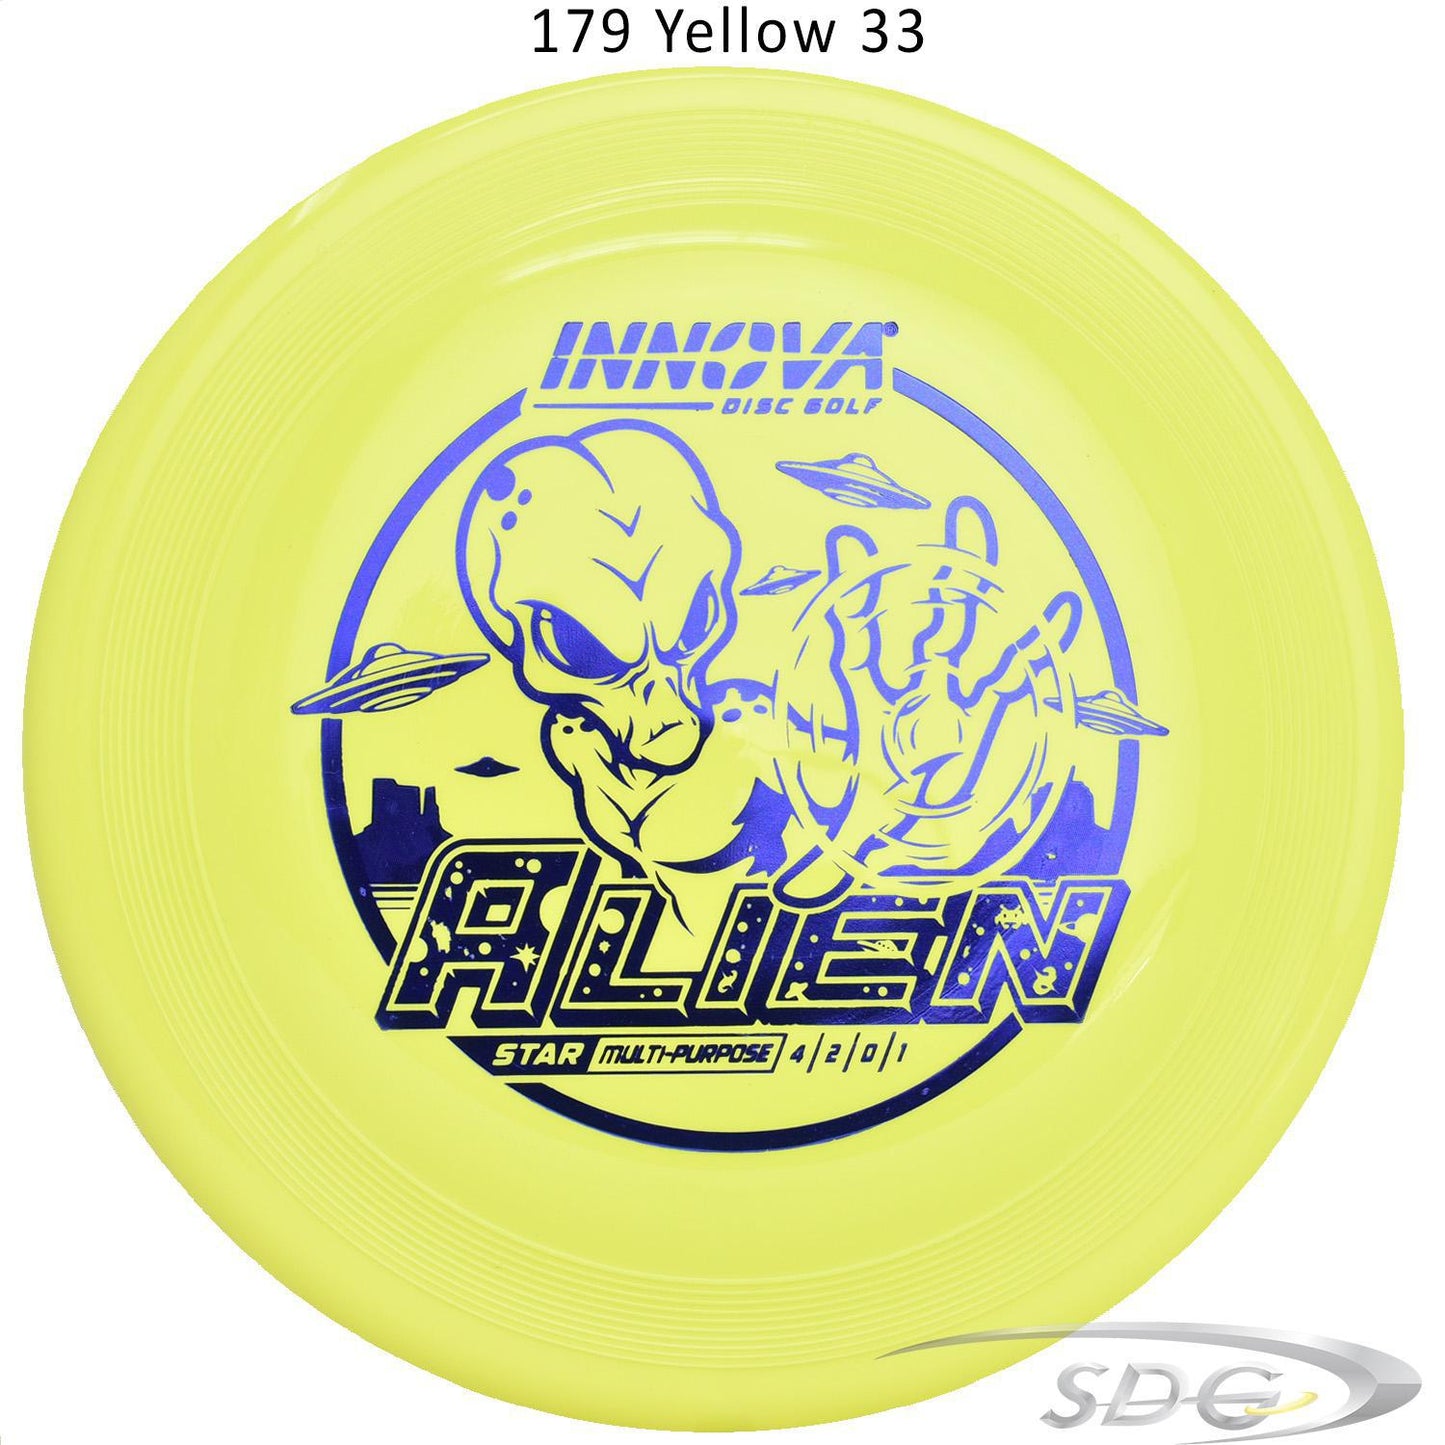 innova-star-alien-disc-golf-mid-range 179 Yellow 33 